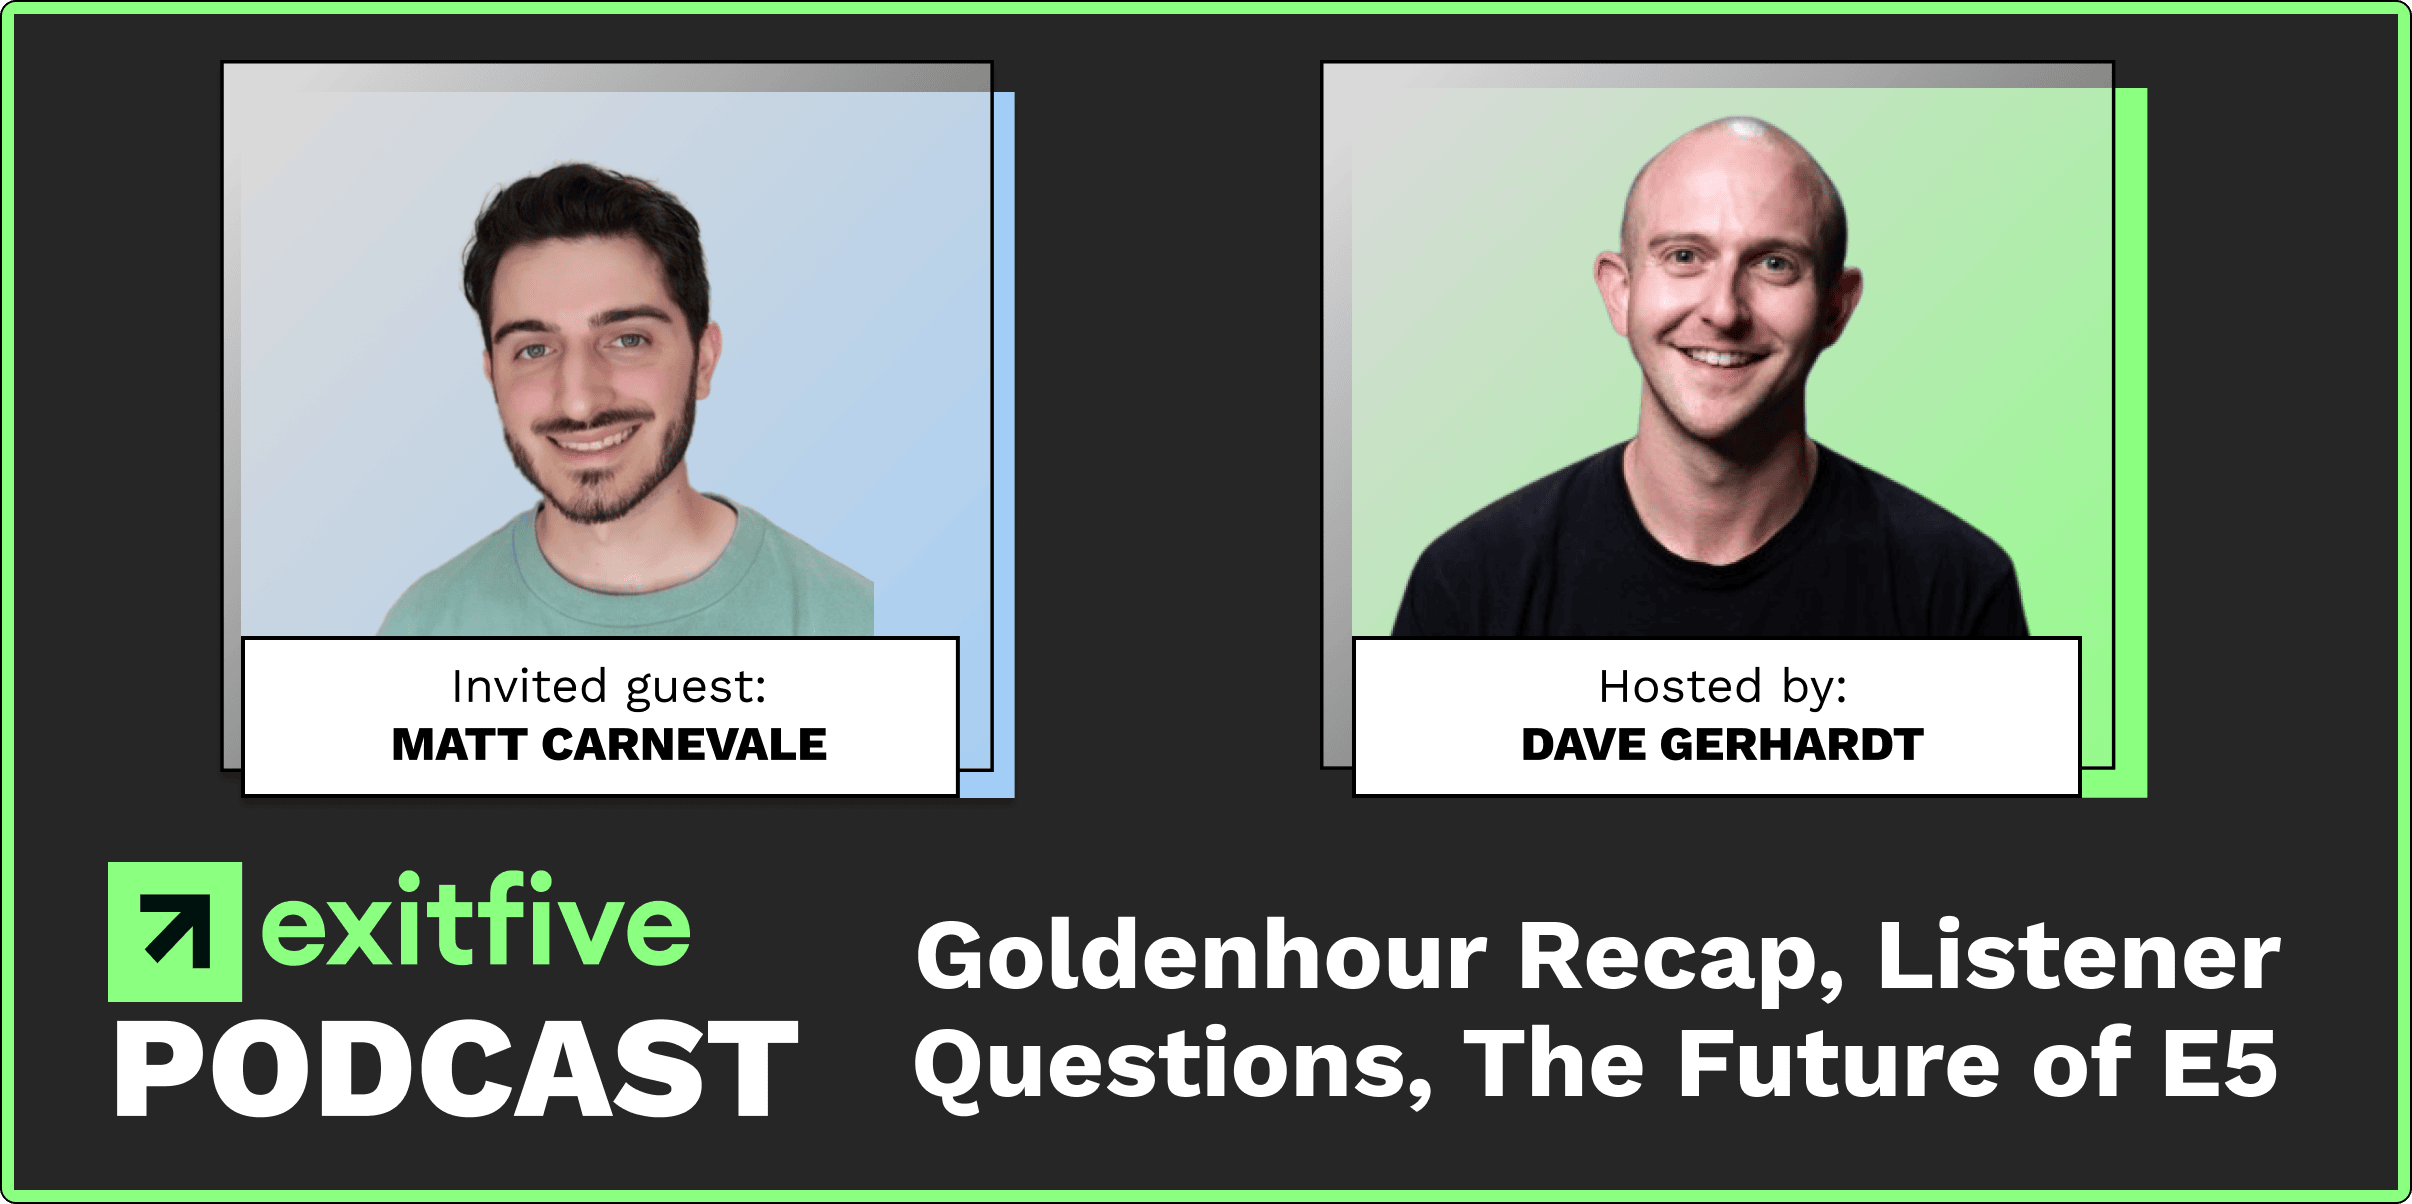 Inside Exit Five | Goldenhour Recap, Listener Questions, and The Future of E5